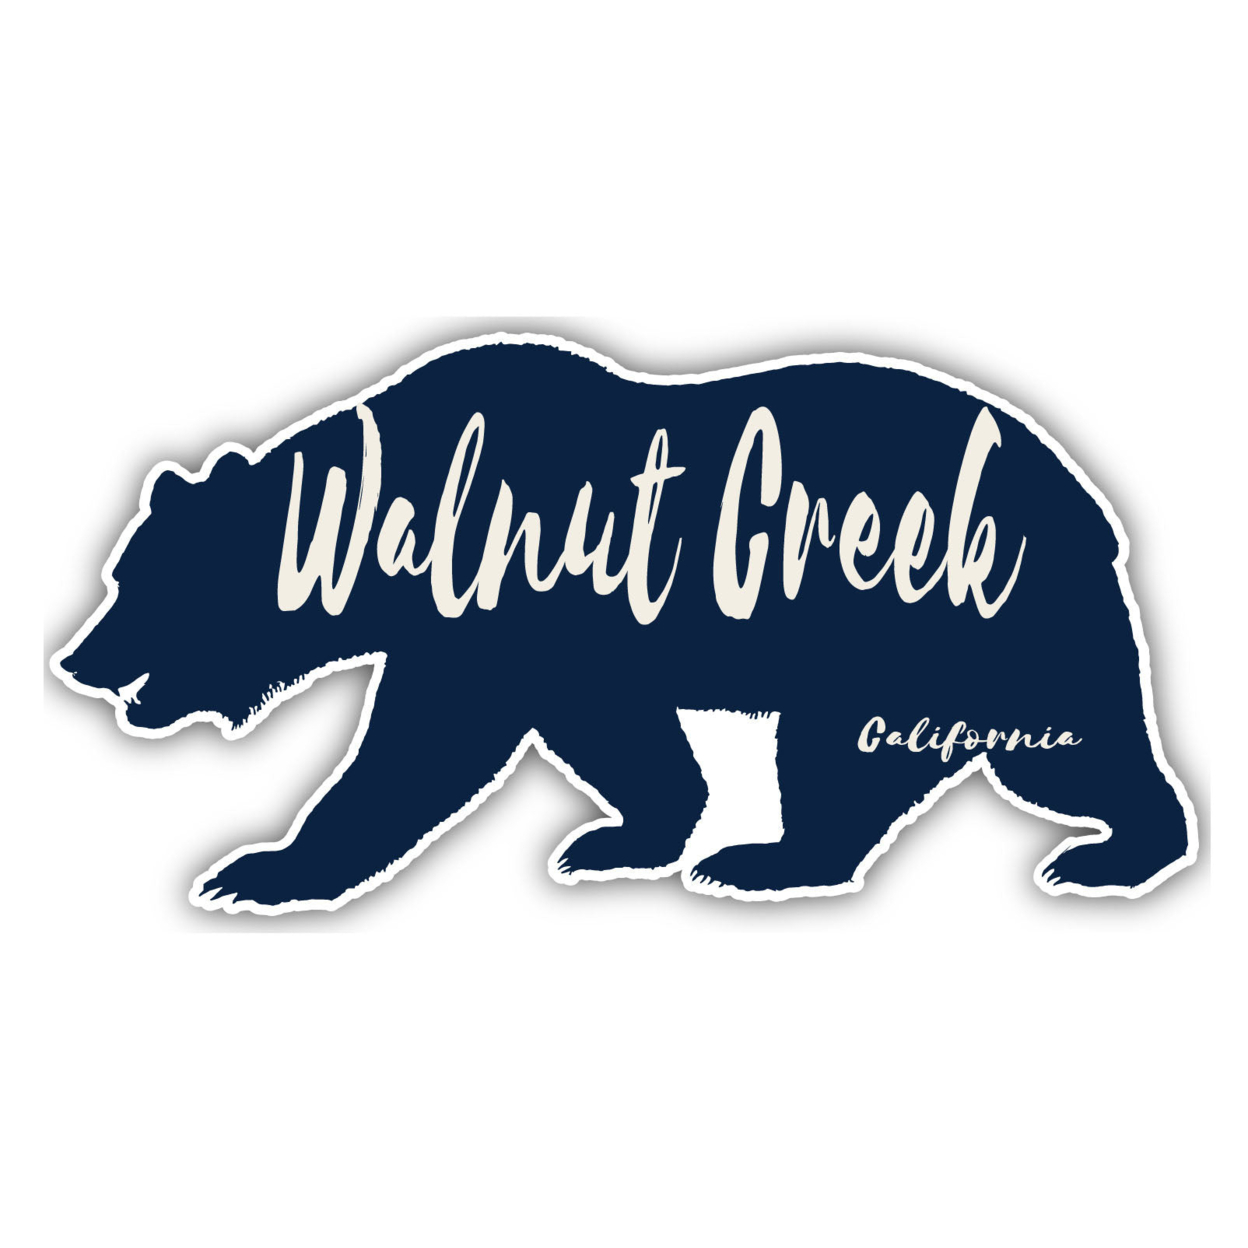 Walnut Creek California Souvenir Decorative Stickers (Choose Theme And Size) - Single Unit, 2-Inch, Bear